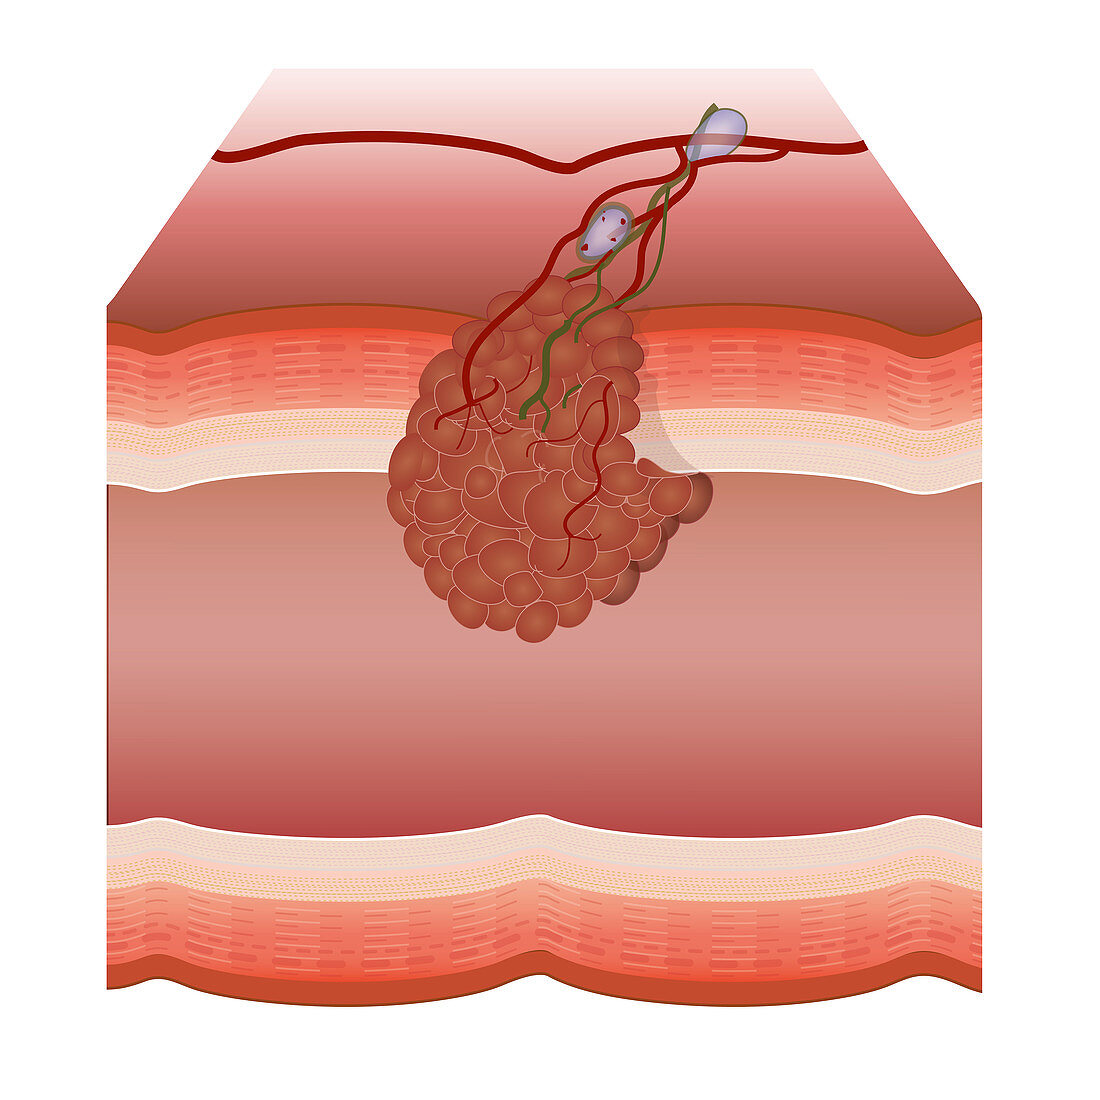 Tumour, illustration